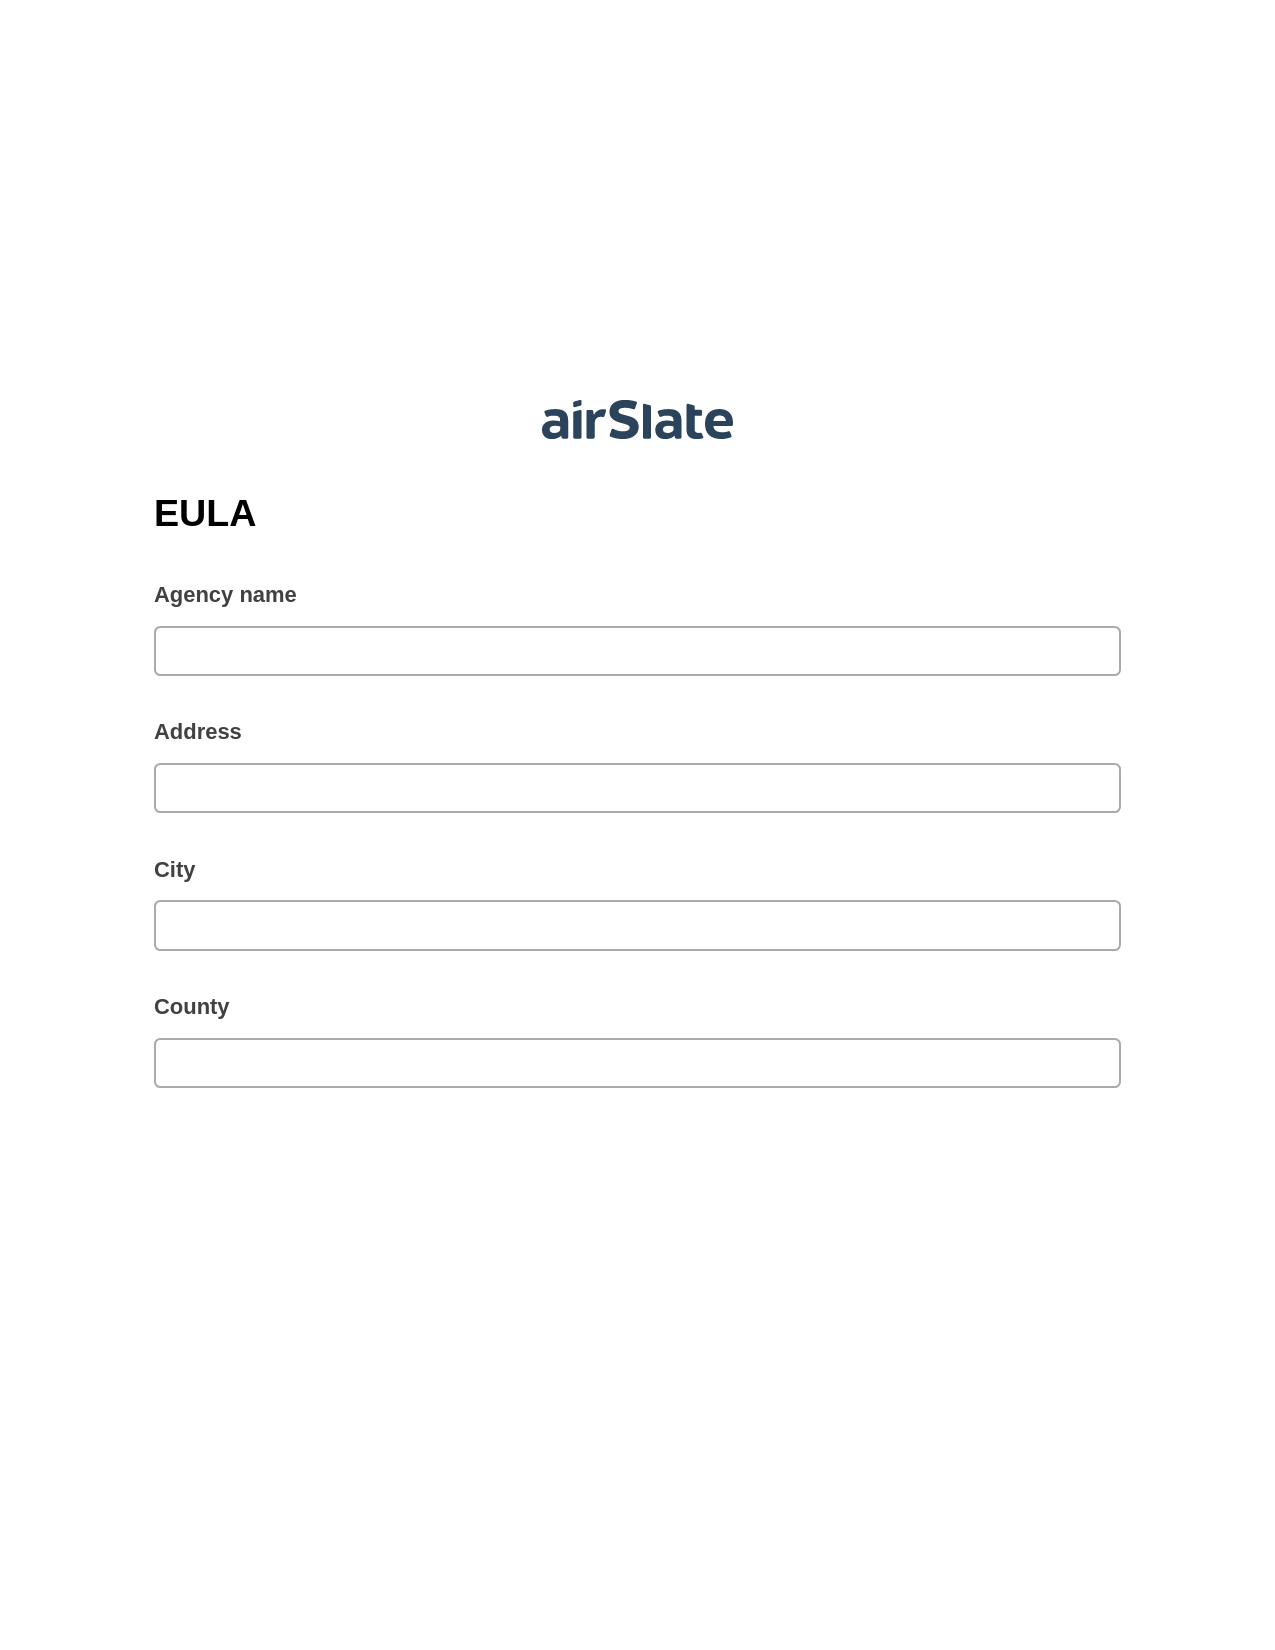 Multirole EULA Pre-fill from Smartsheet Bot, SendGrid send Campaign bot, Export to Excel 365 Bot